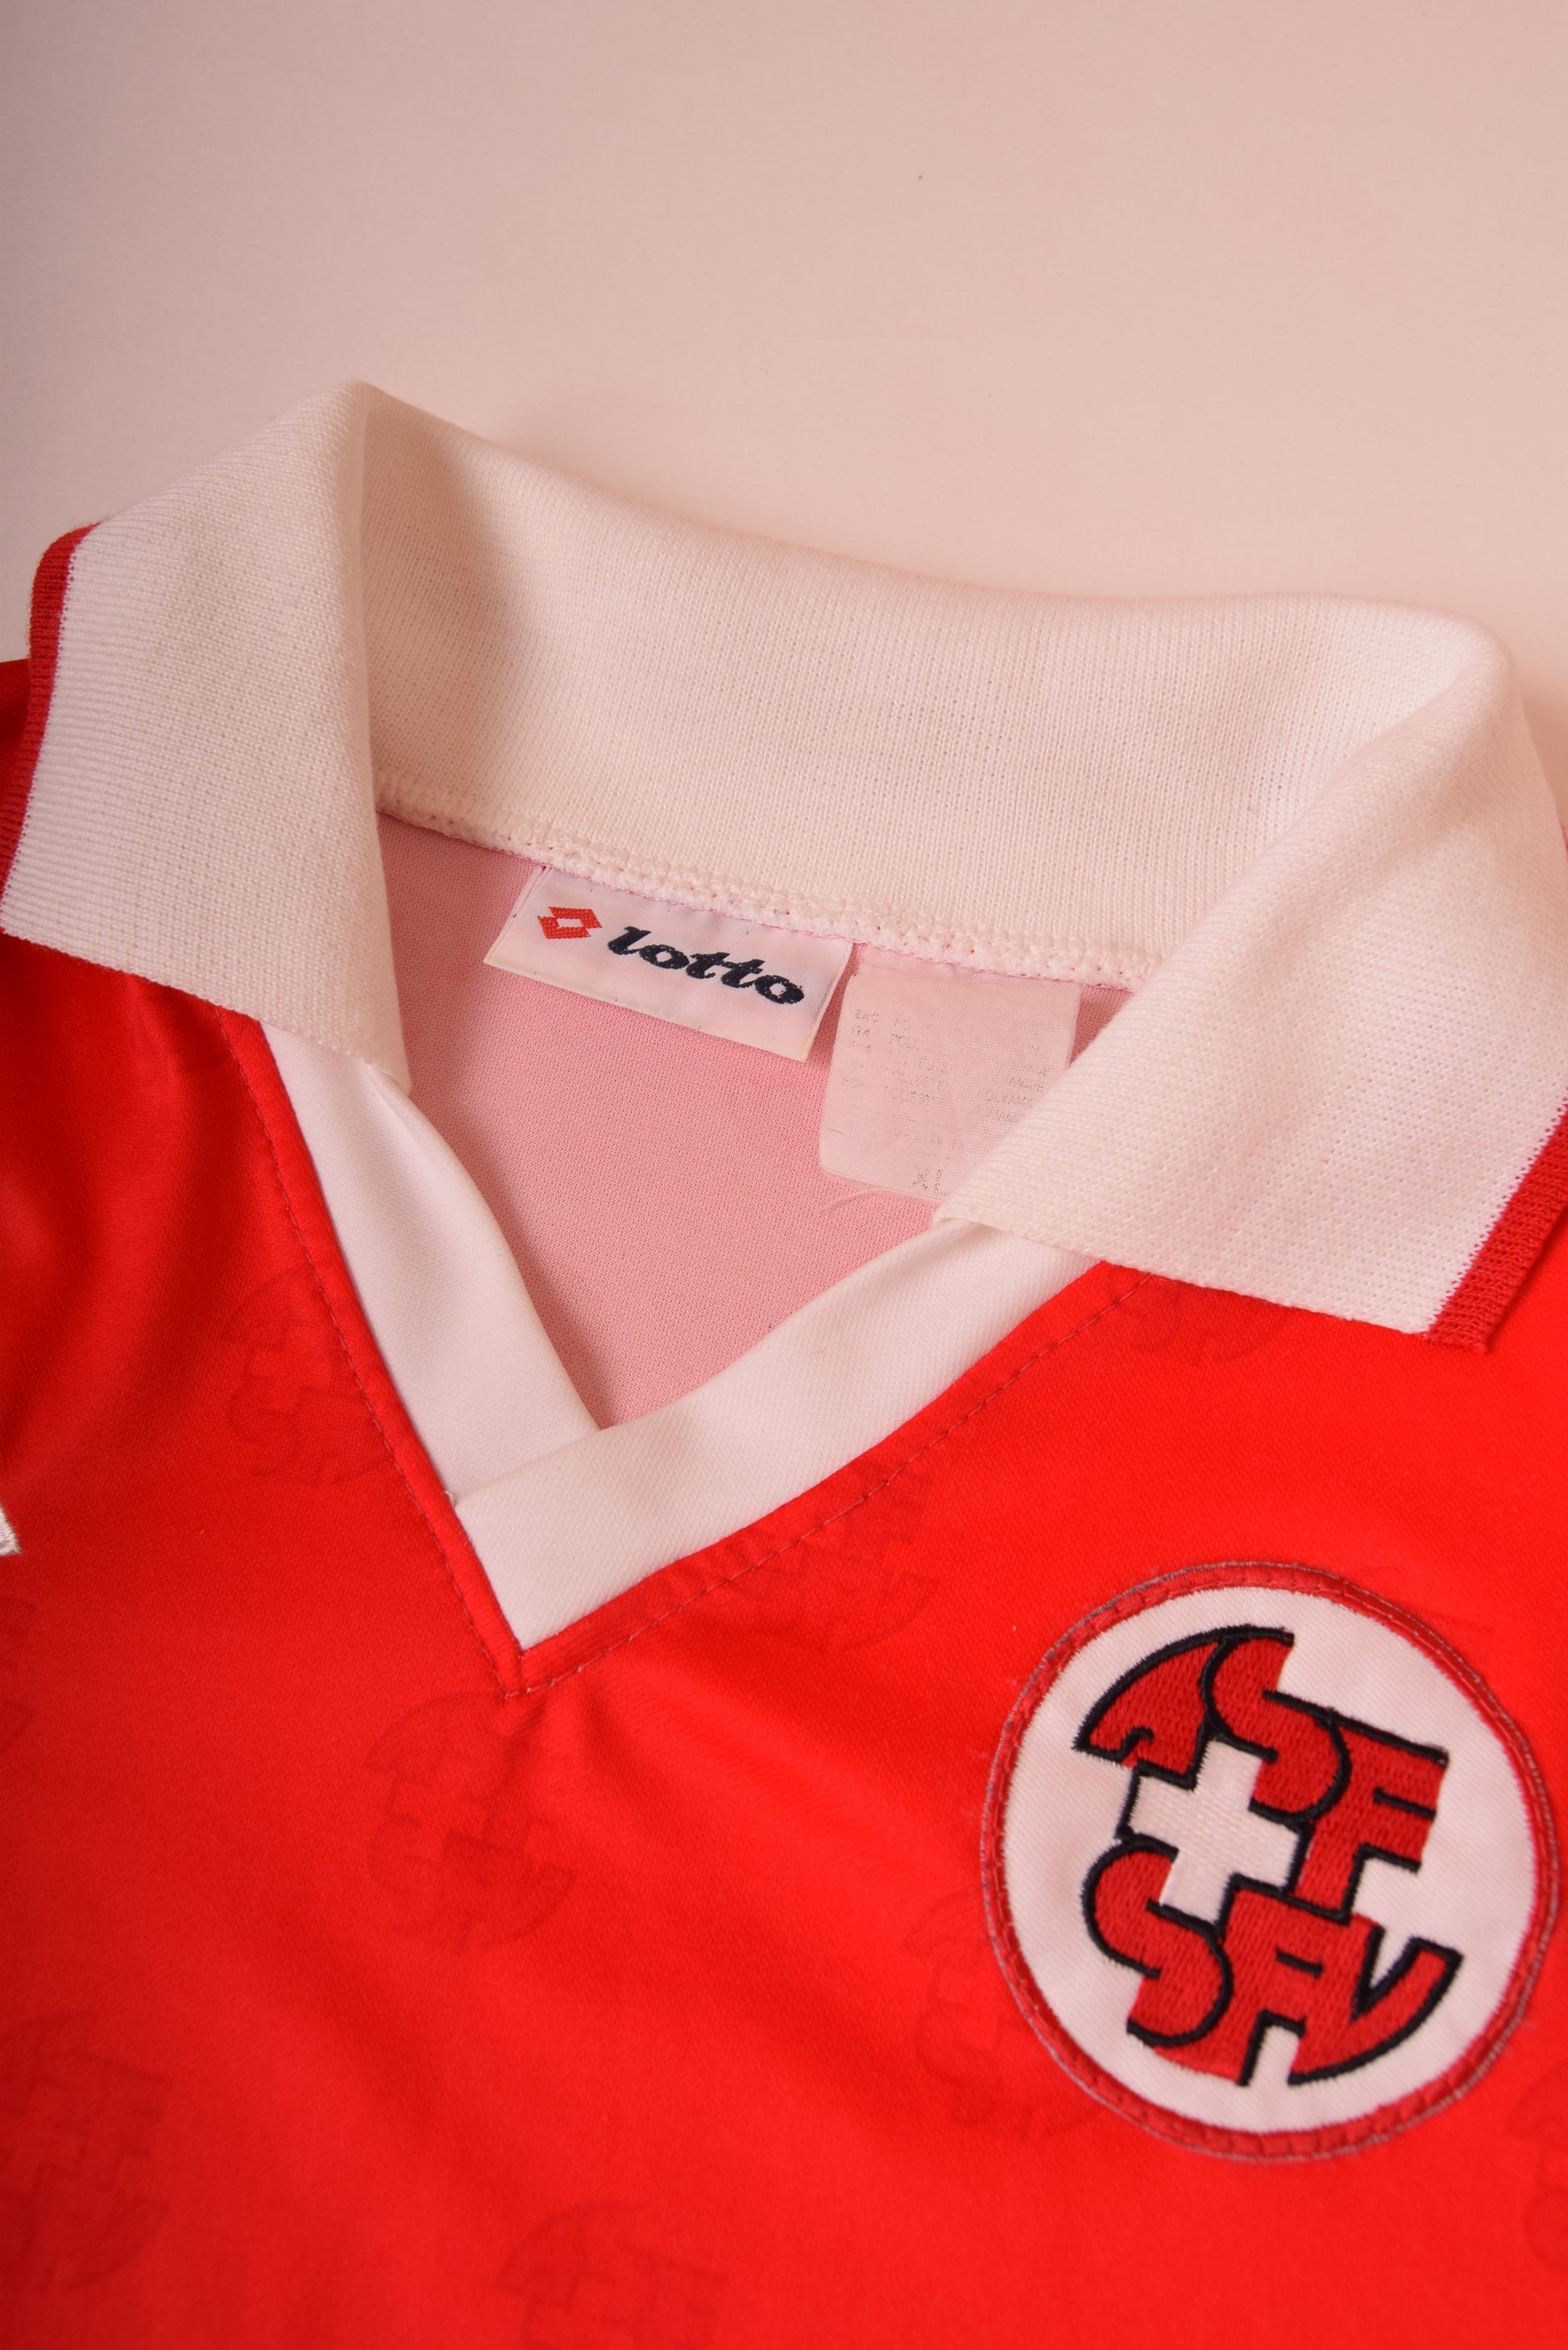 Switzerland Lotto Home Football Shirt #10 Sforza Red Size L